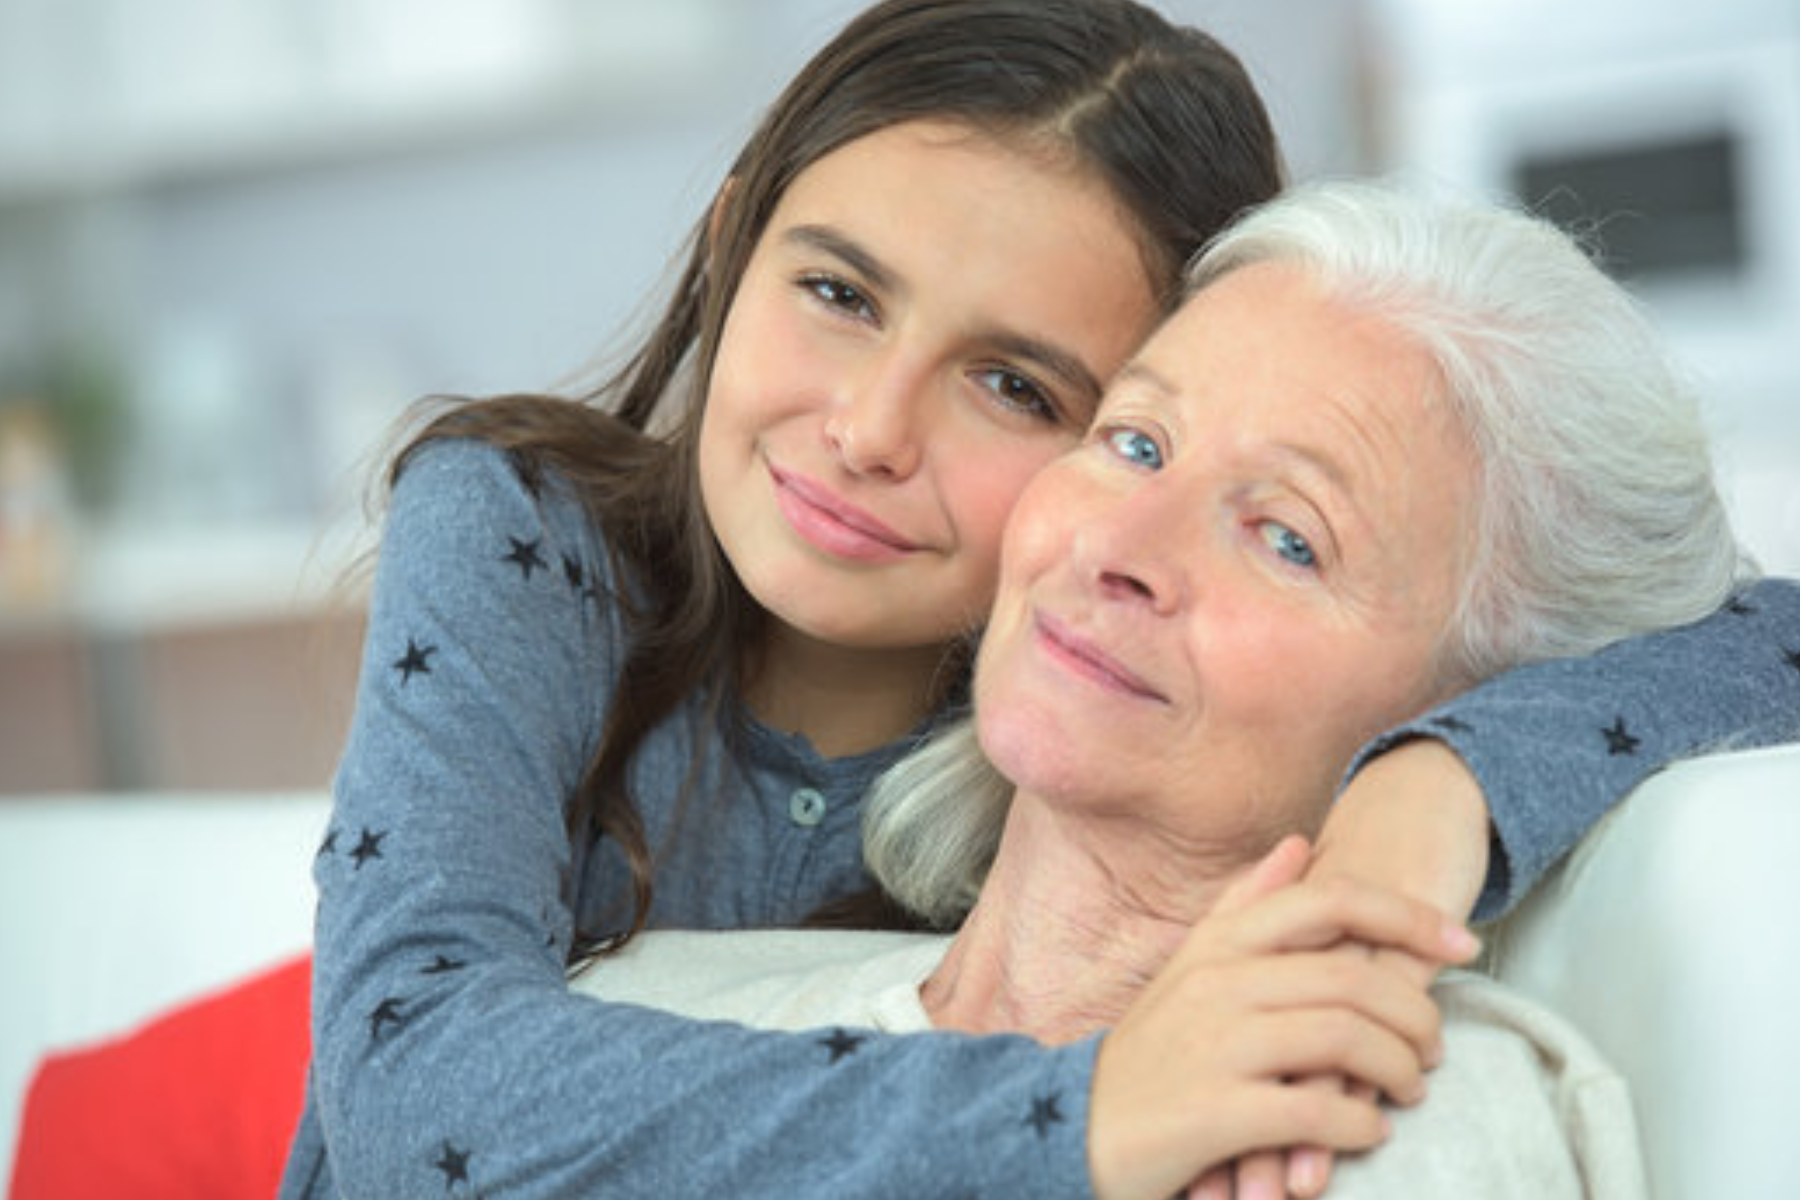 A grandson embraces his grandmother